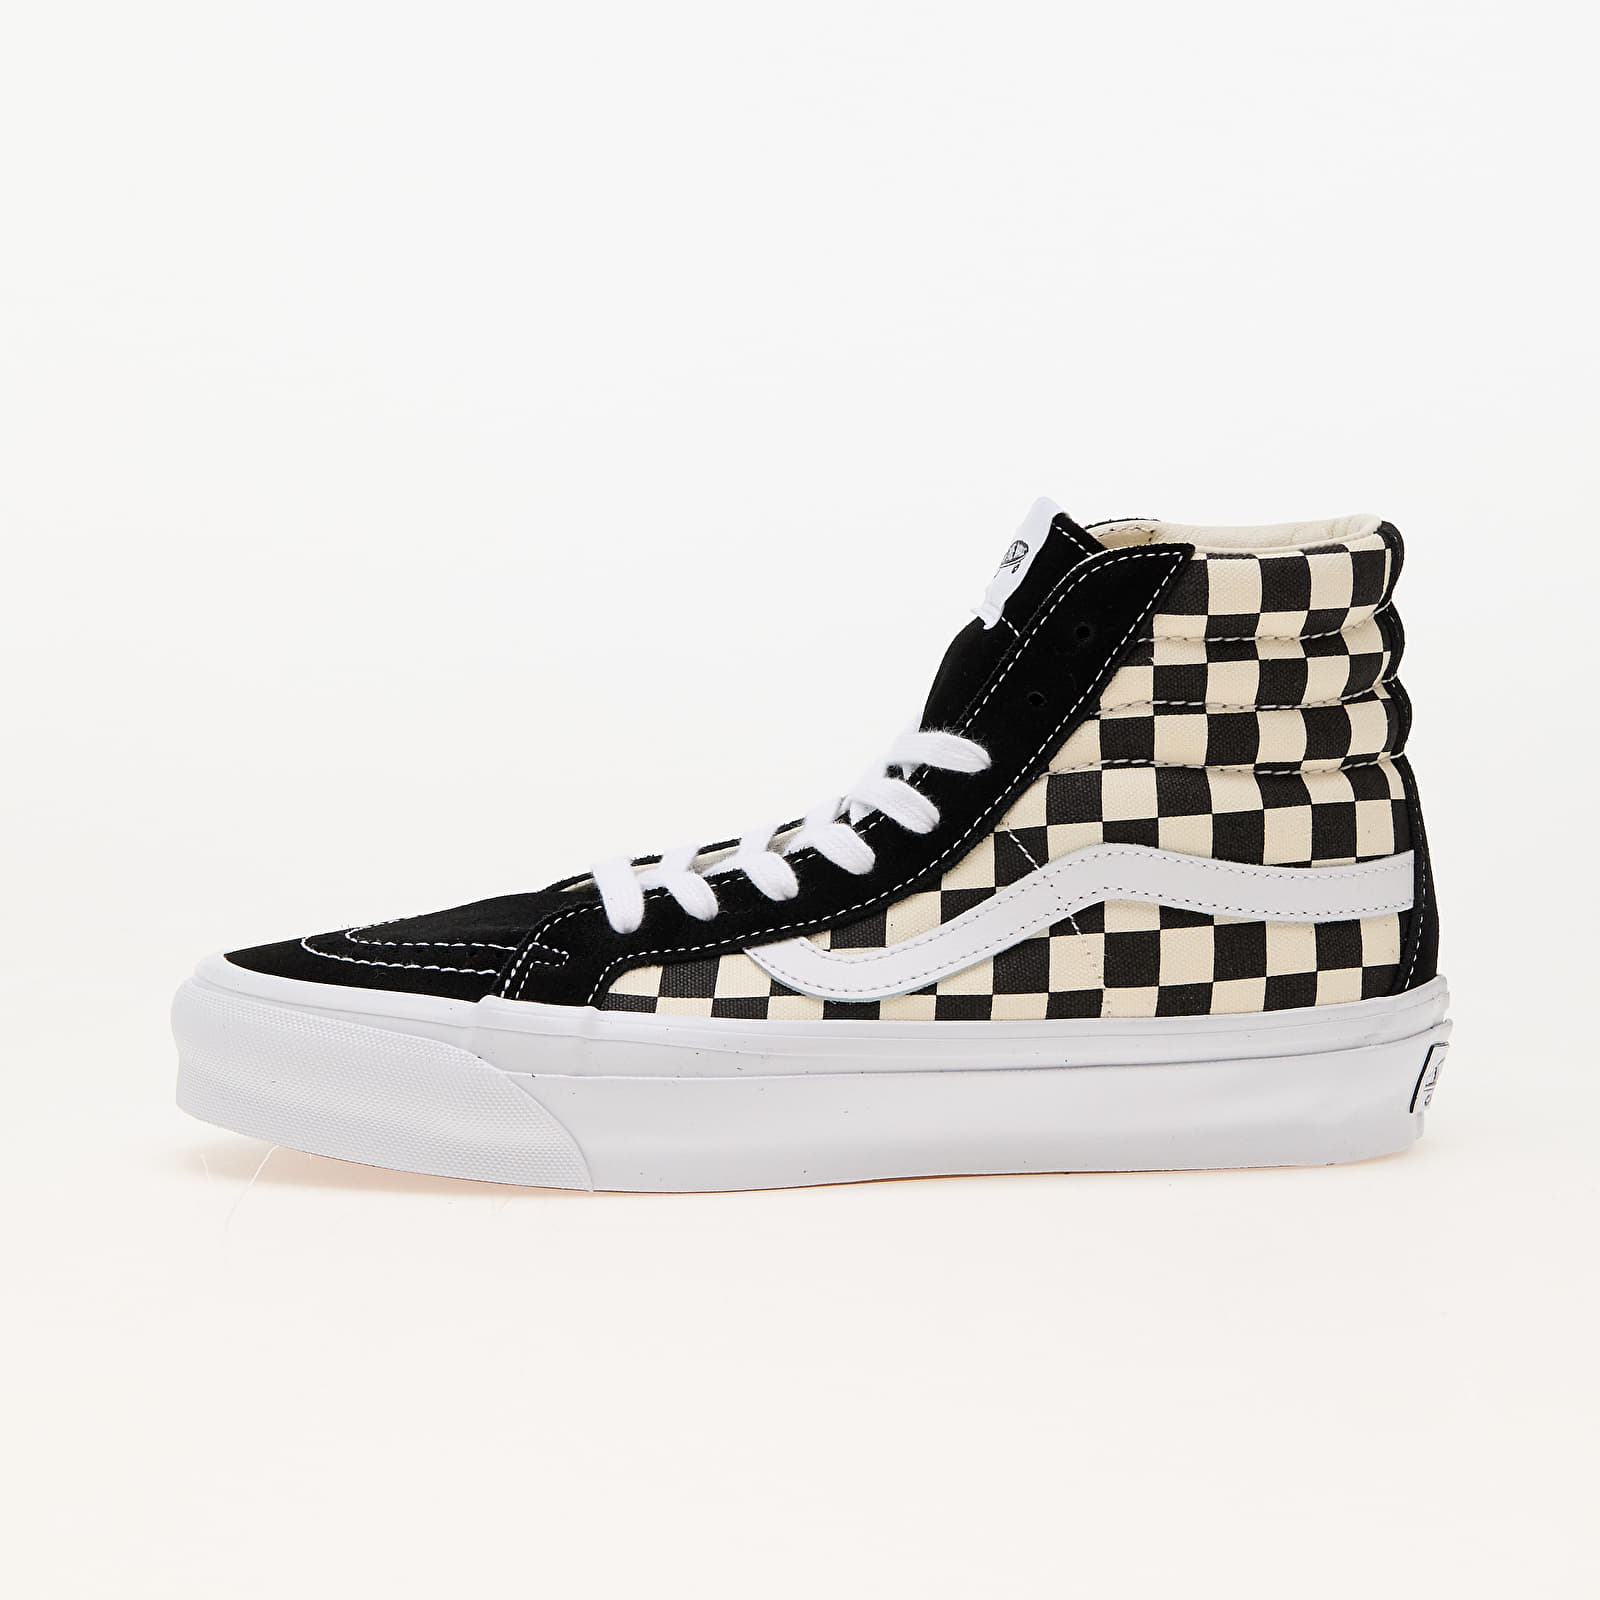 Chaussures et baskets homme Vans Sk8-Hi Reissue 38 LX Checkerboard Black/ Off White